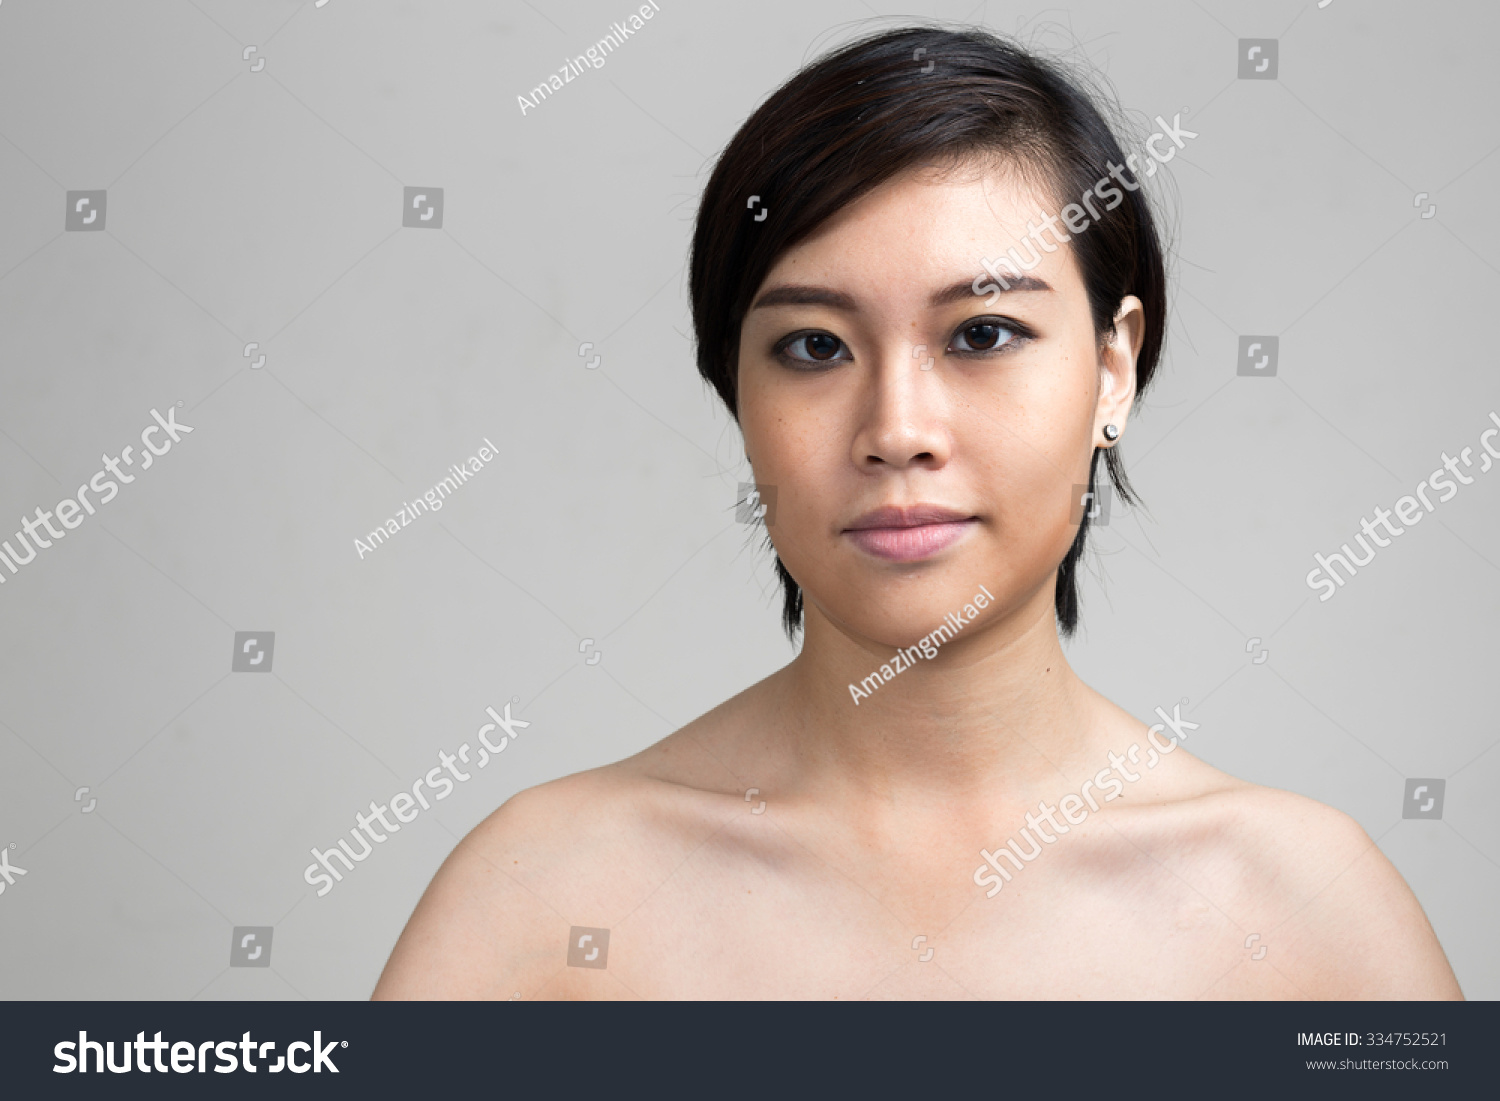 Naked asian girl hair color Naked Asian Woman Short Hair Stock Photo Edit Now 334752521